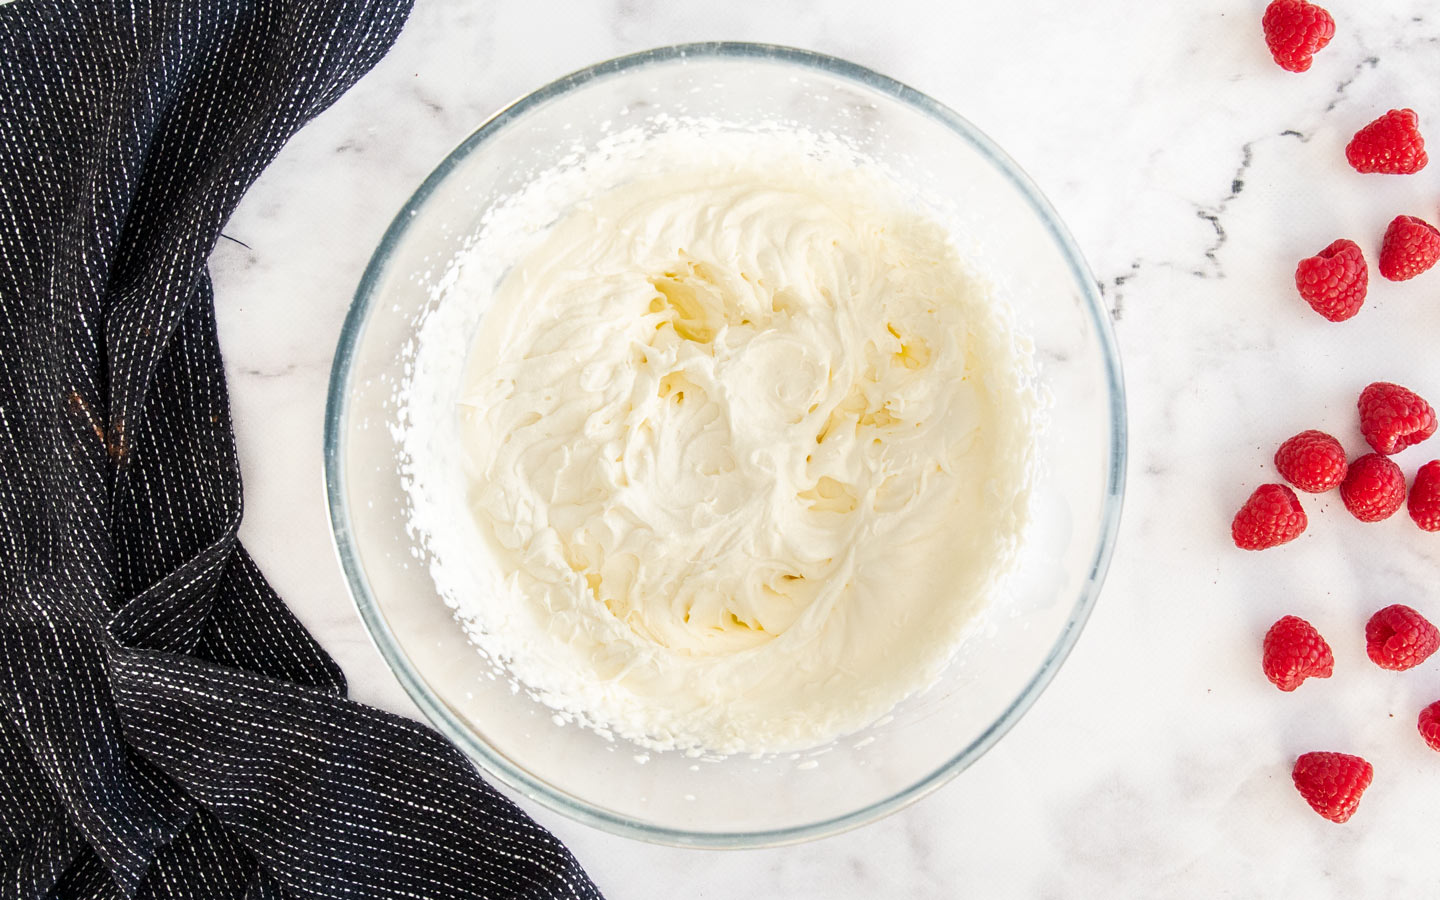 Cream whipped to stiff peaks.